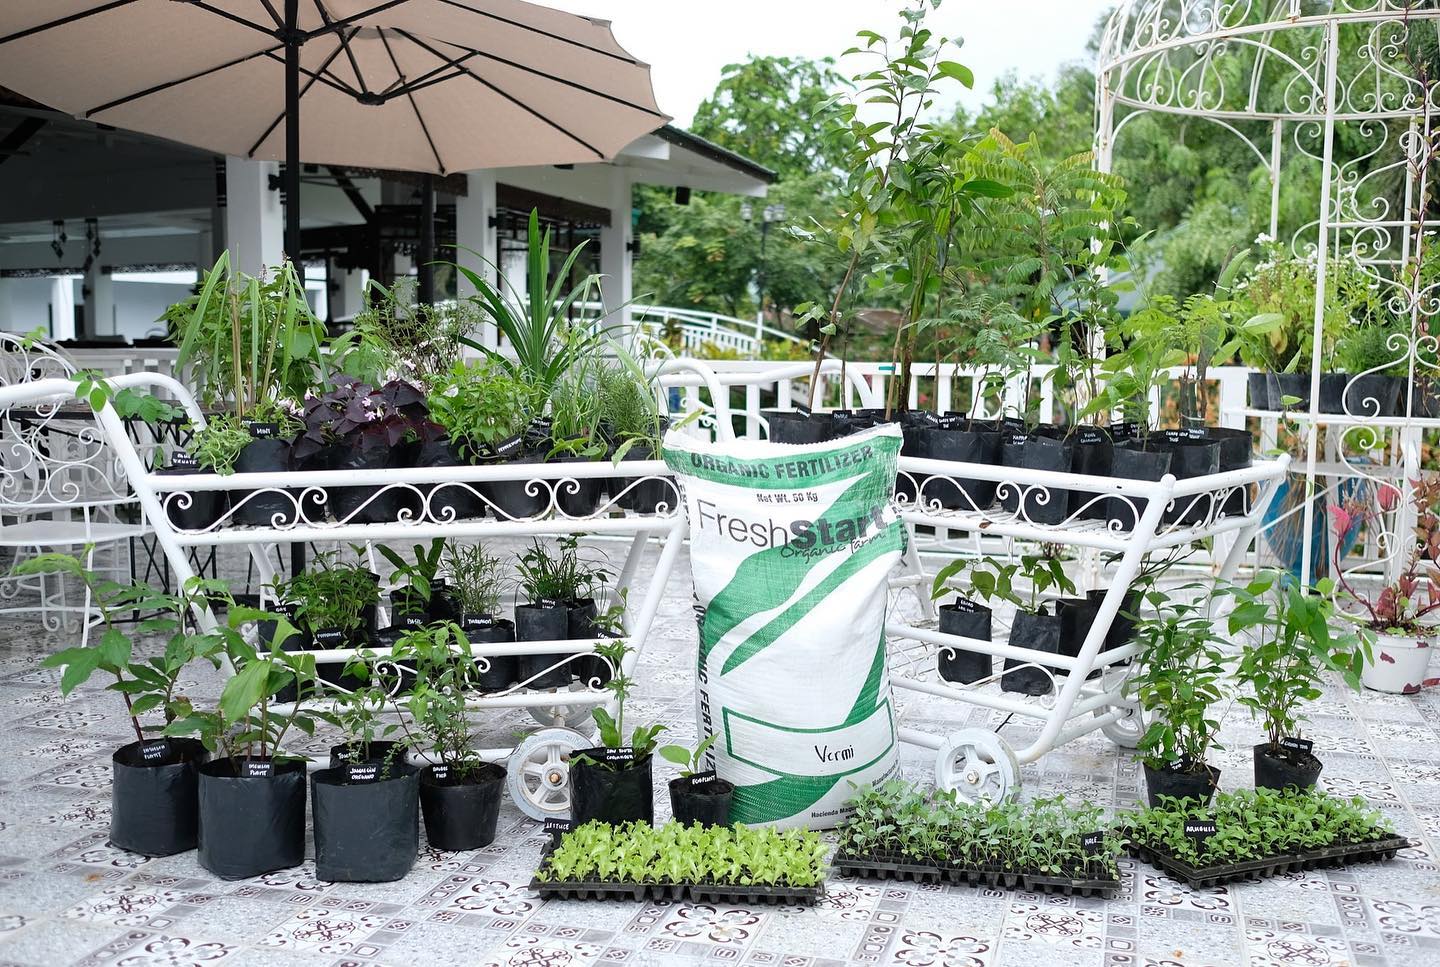 Fresh Start Organic Farm in Bacolod